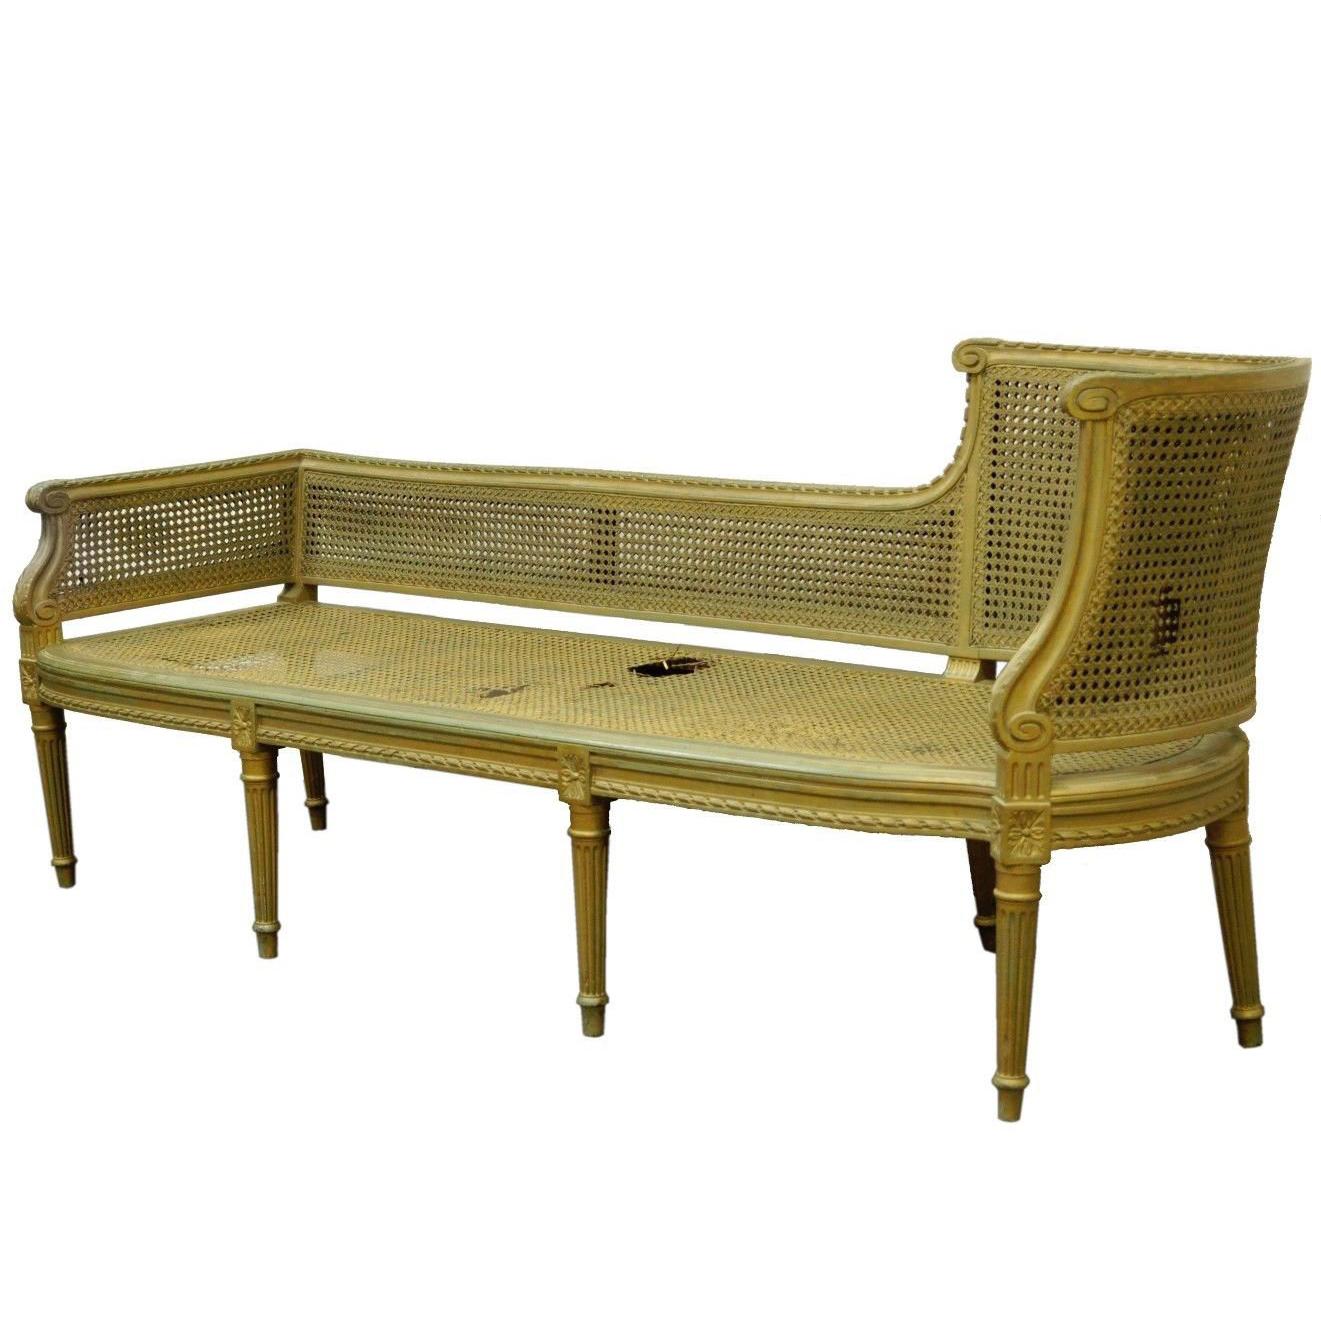 Antike Französisch Louis XVI Stil Caned Chaise Lounge Recamier Fainting Couch Sofa